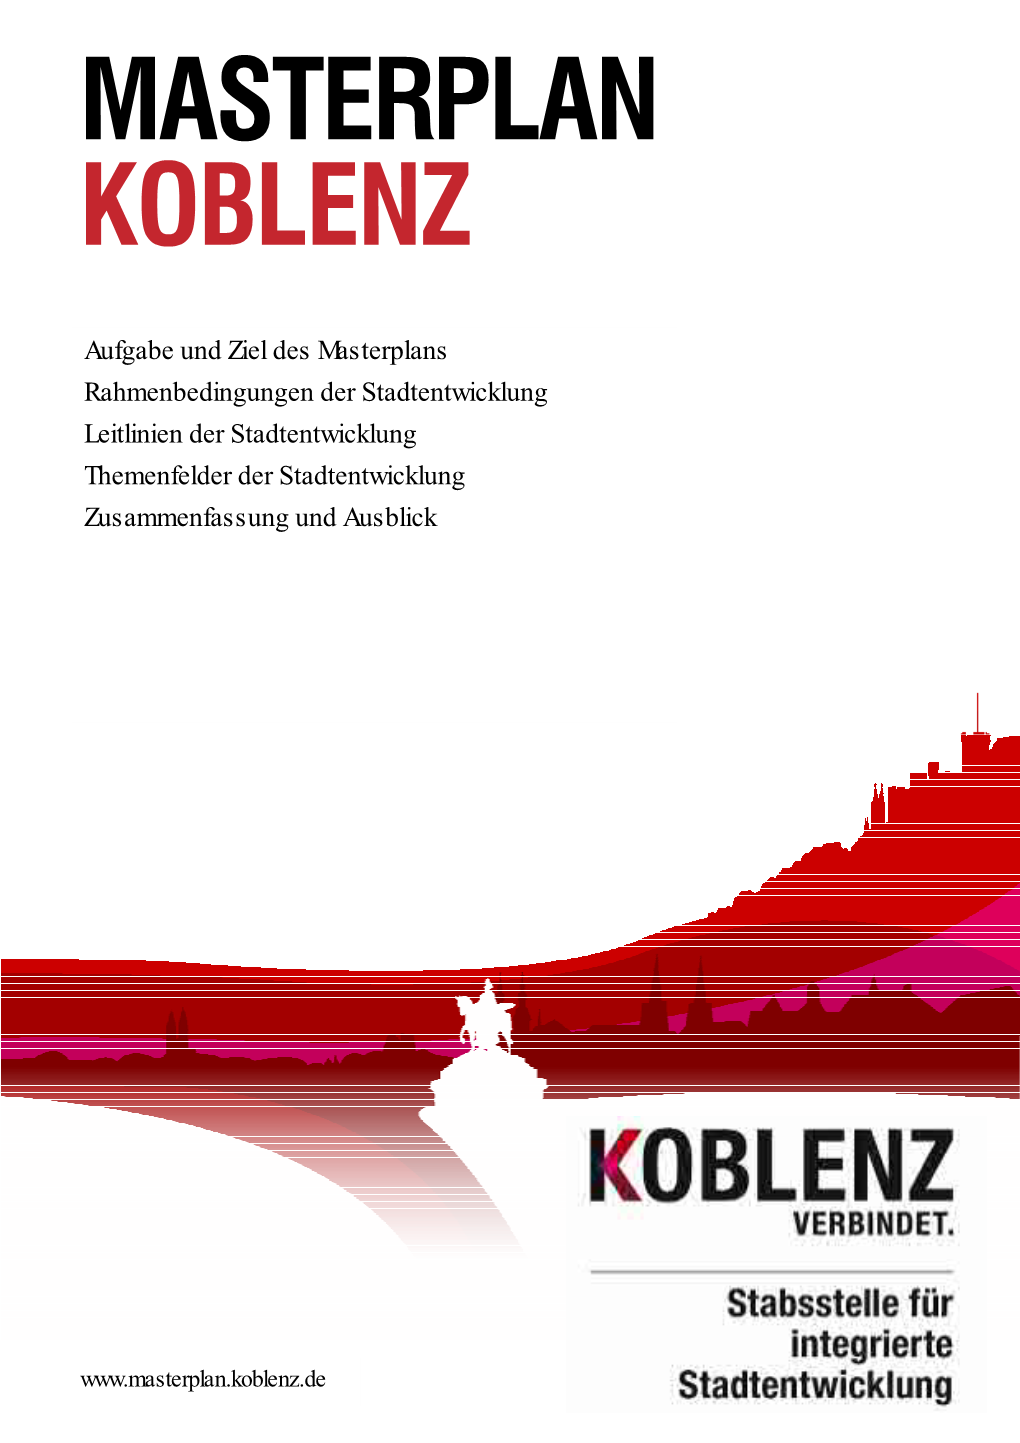 Masterplan Koblenz